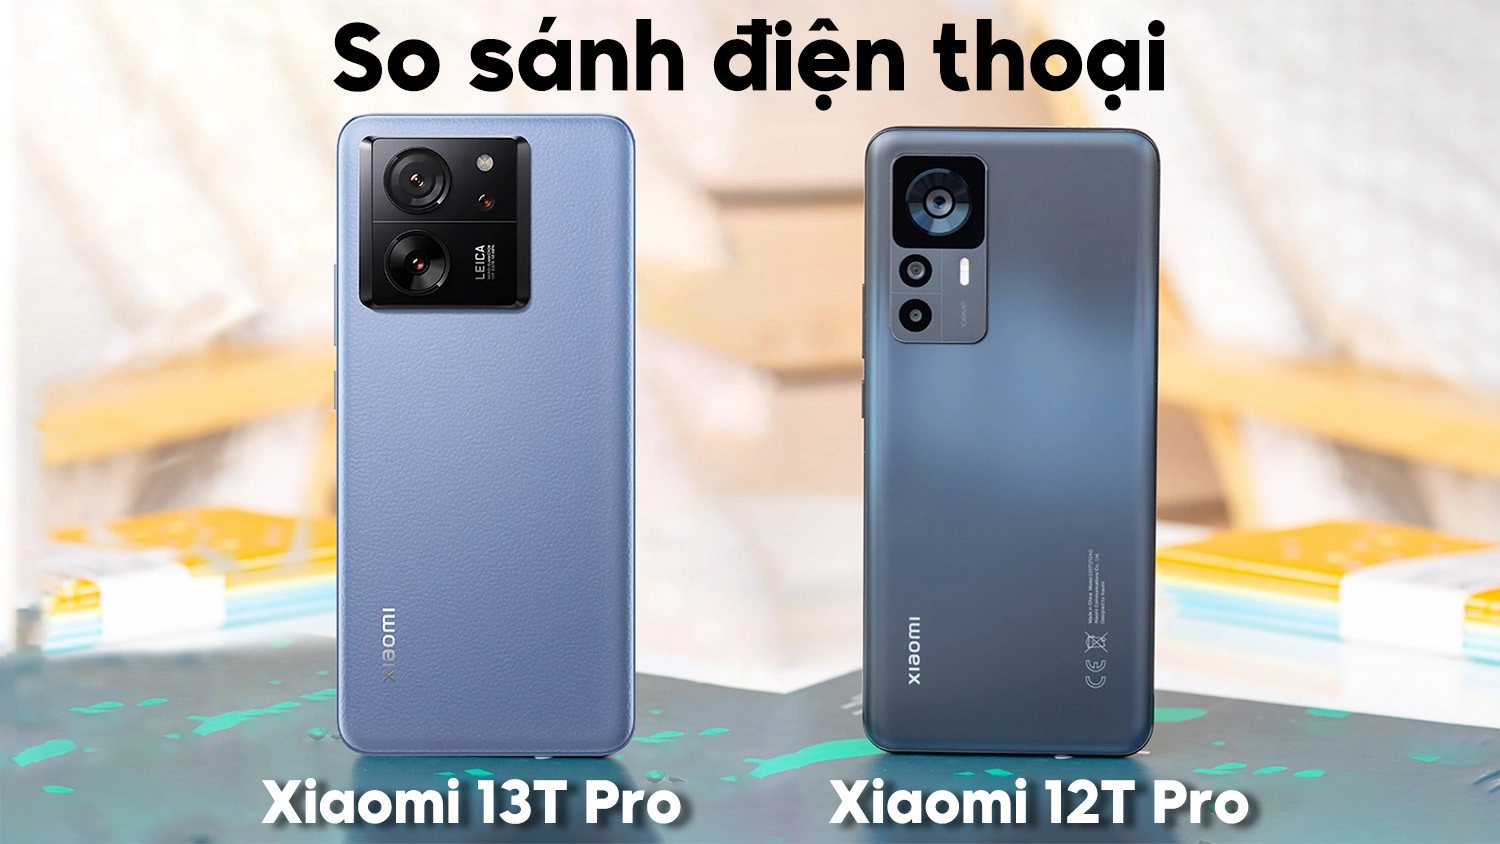 Xiaomi 13T Pro vs Xiaomi 12T Pro - What's New? 